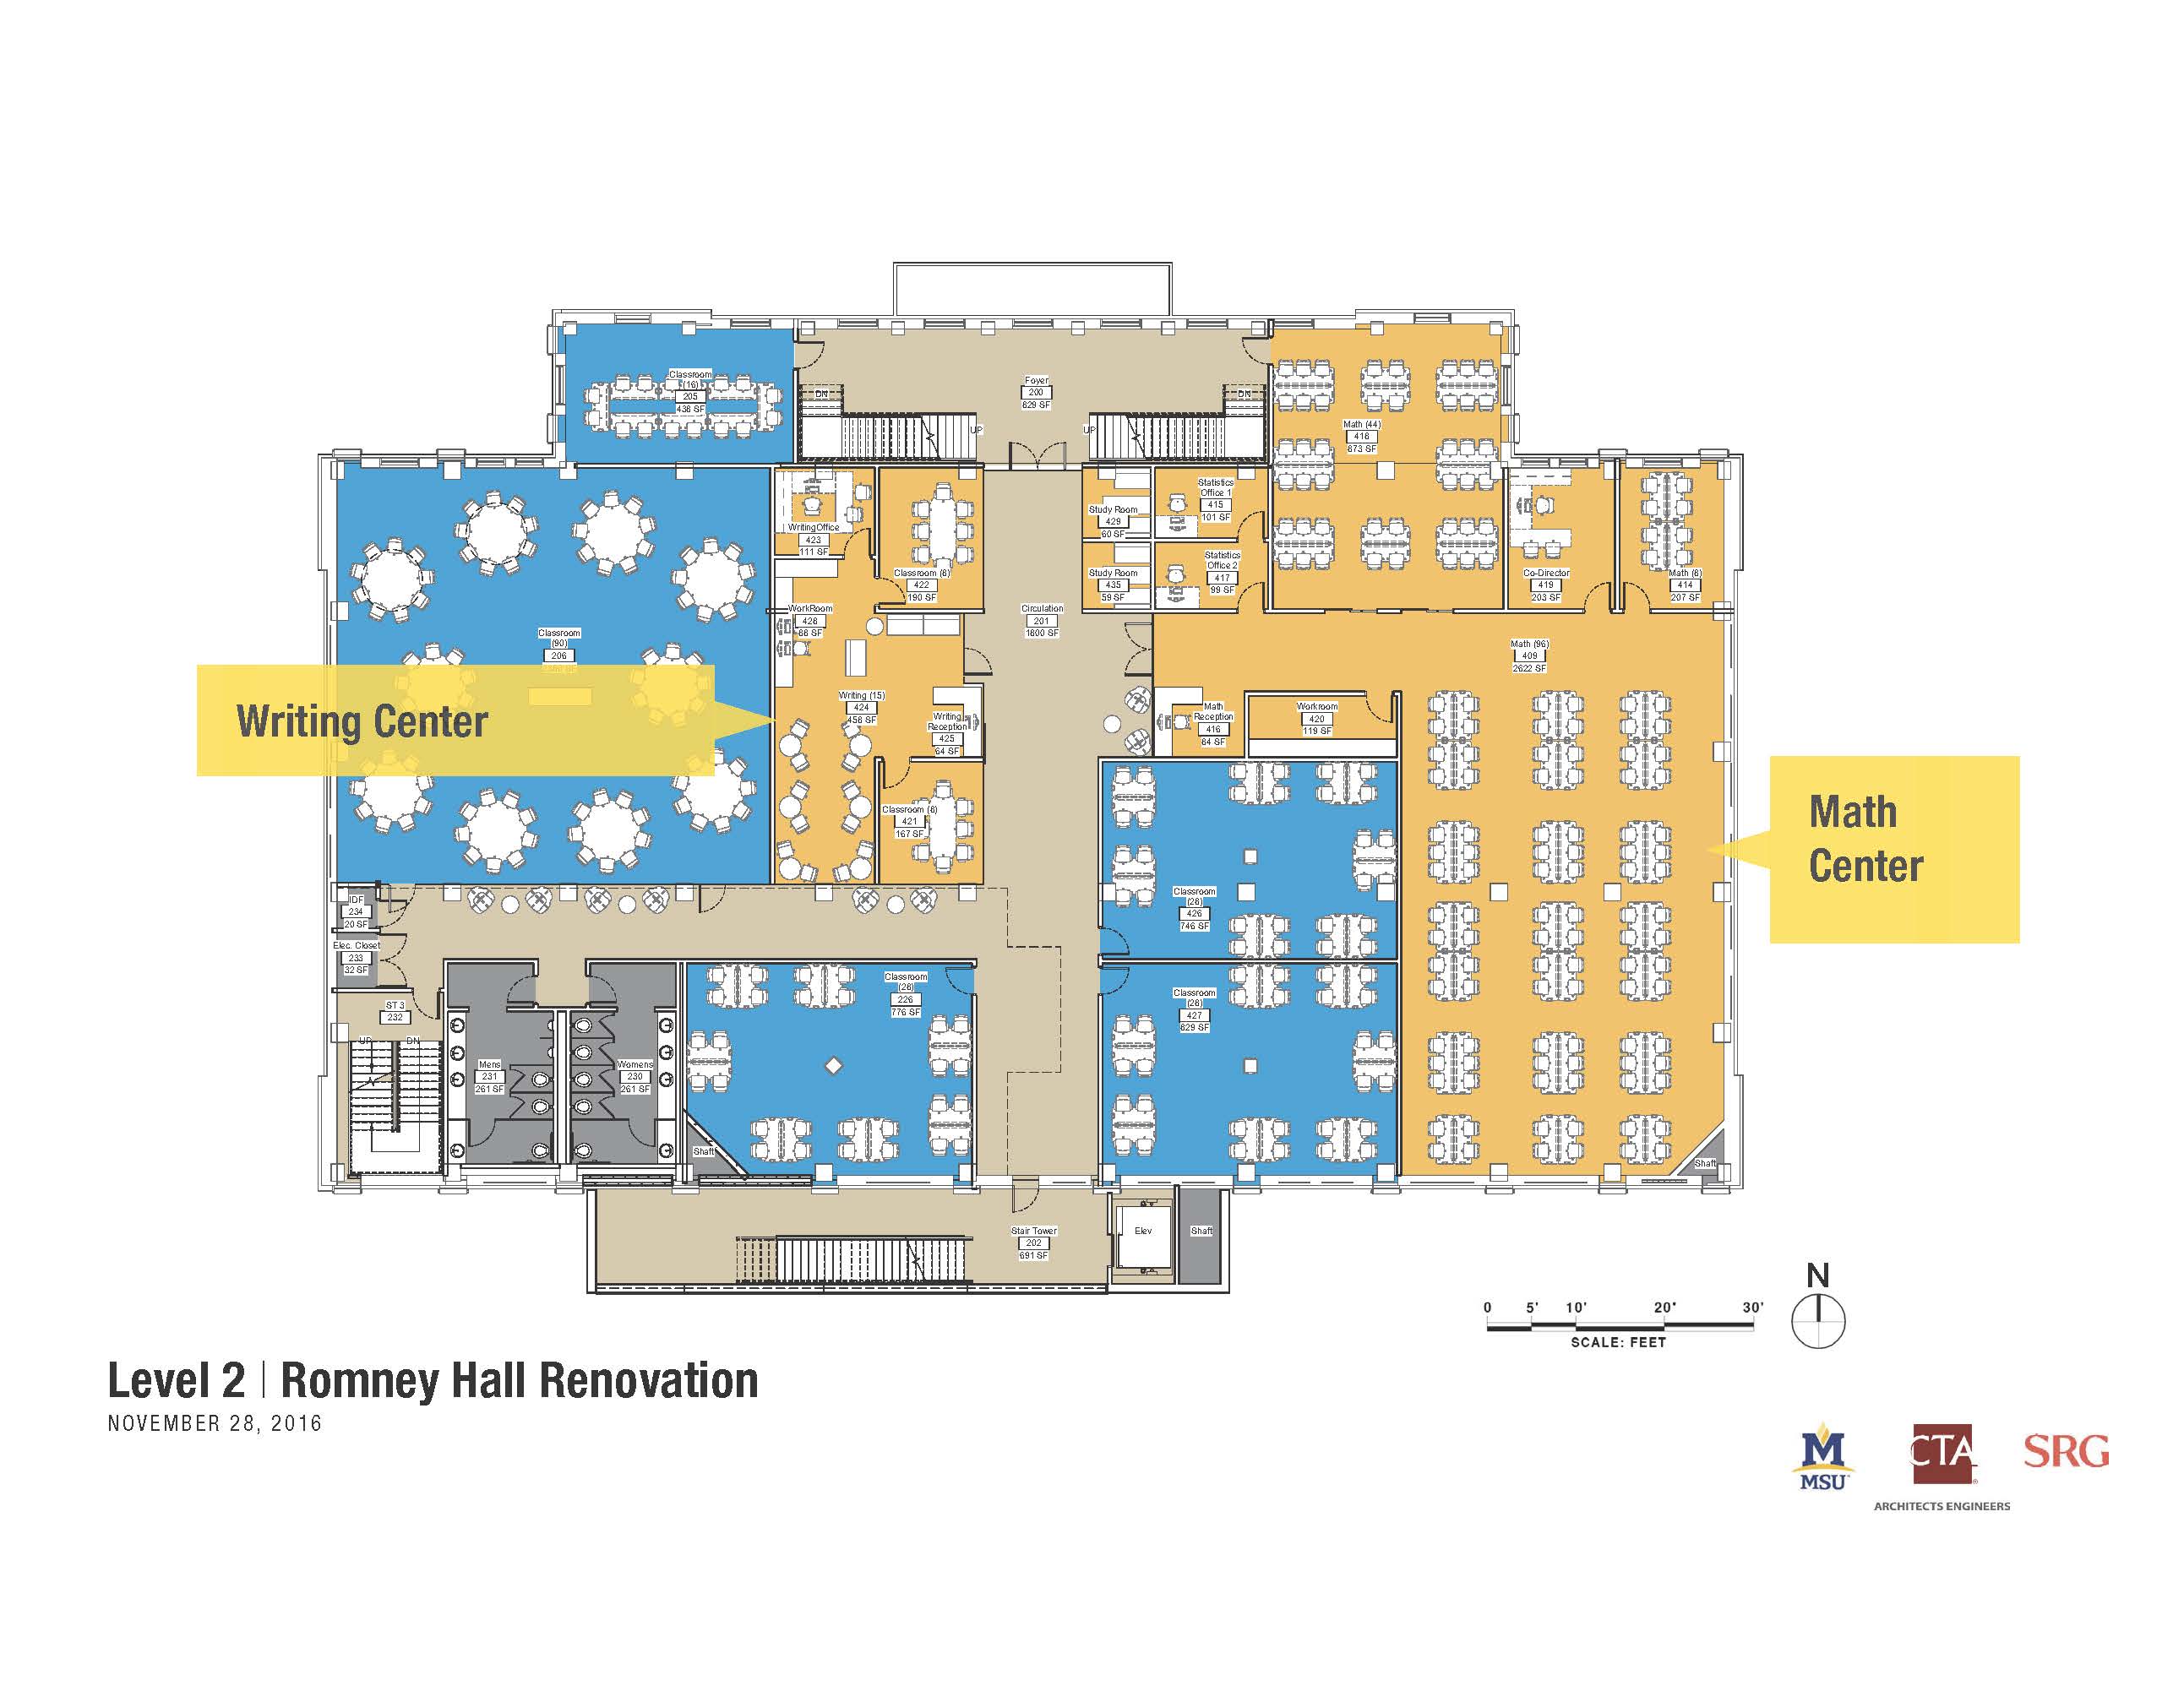 Romney Hall repurposing floorplan showing Level 2 of the building.